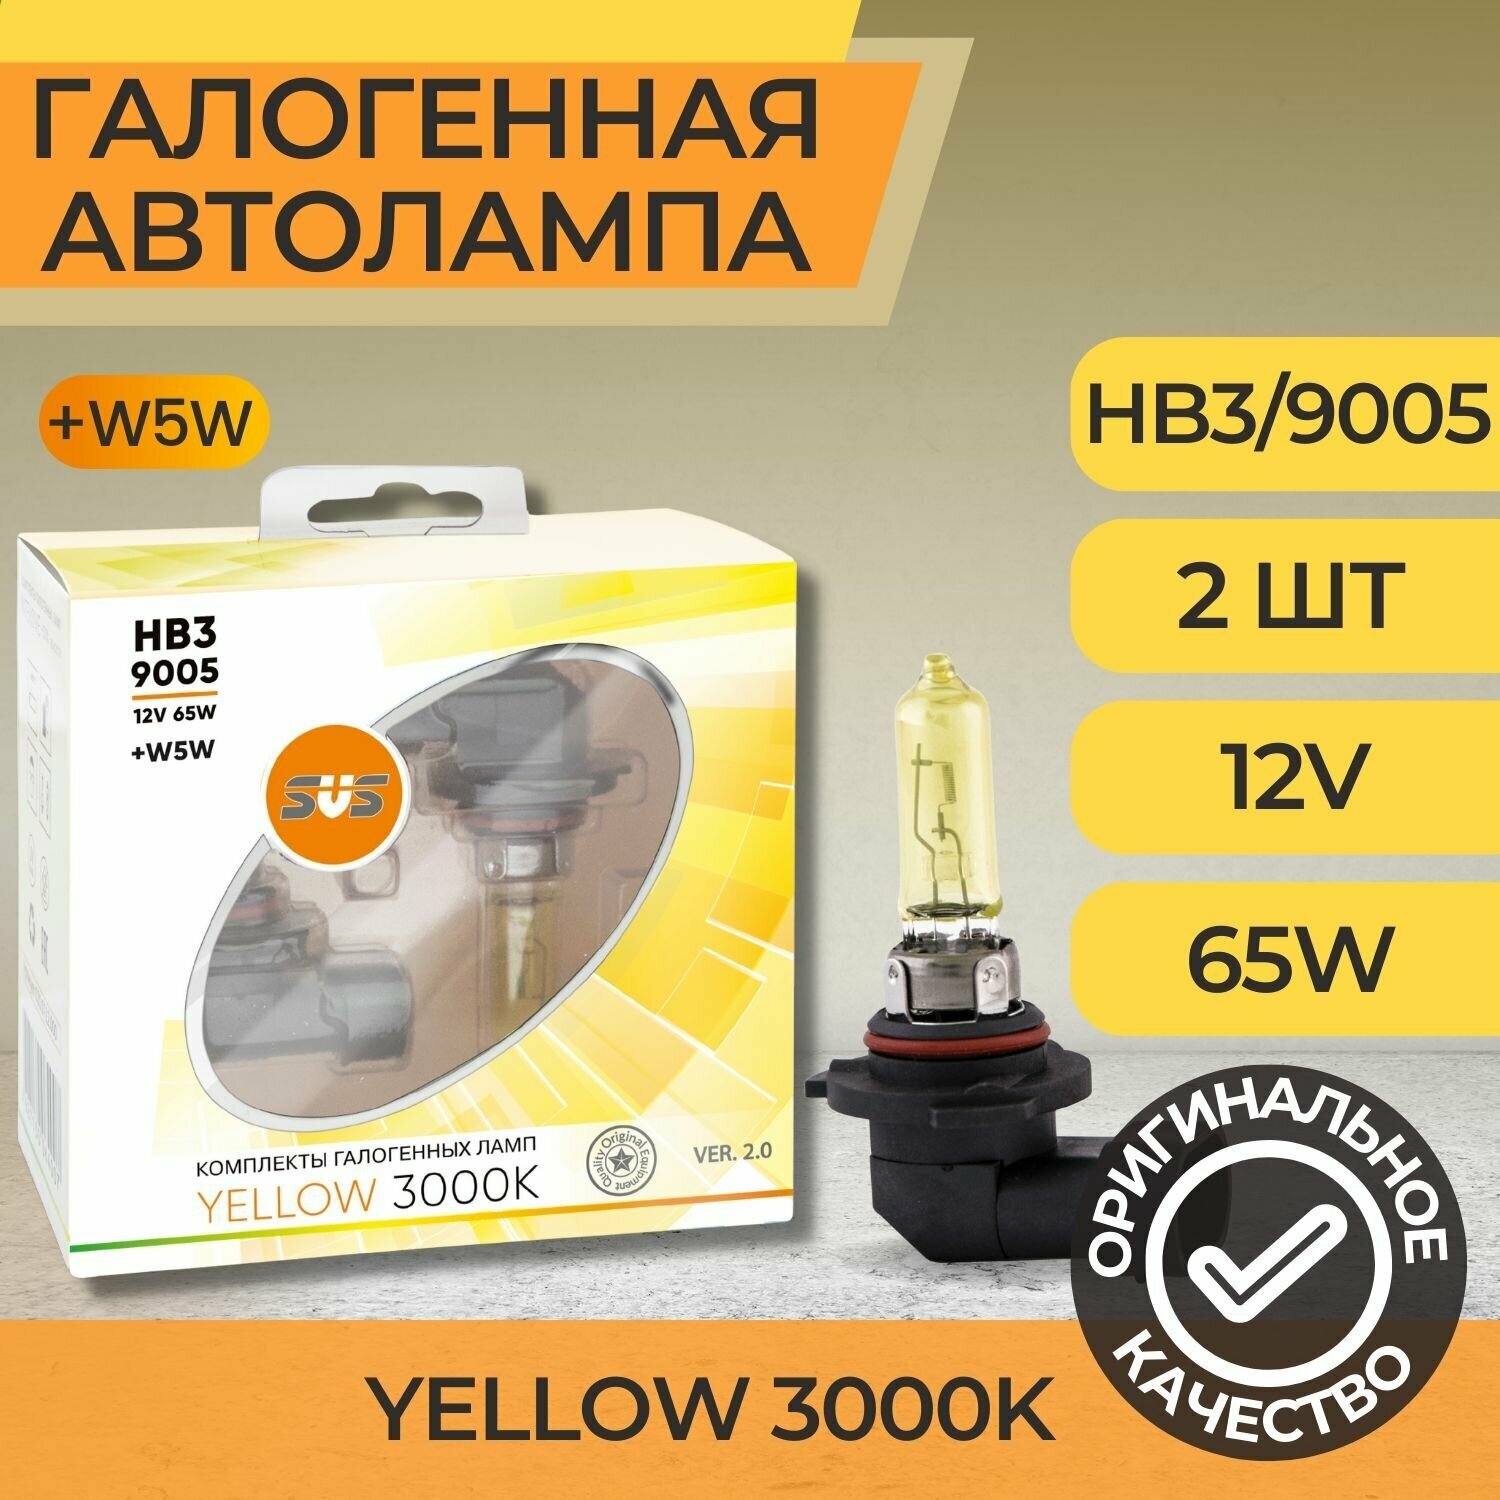 Галогенные лампы серия Yellow 3000K 12V HB3/9005 65W+W5W, комплект 2шт. Ver.2.0